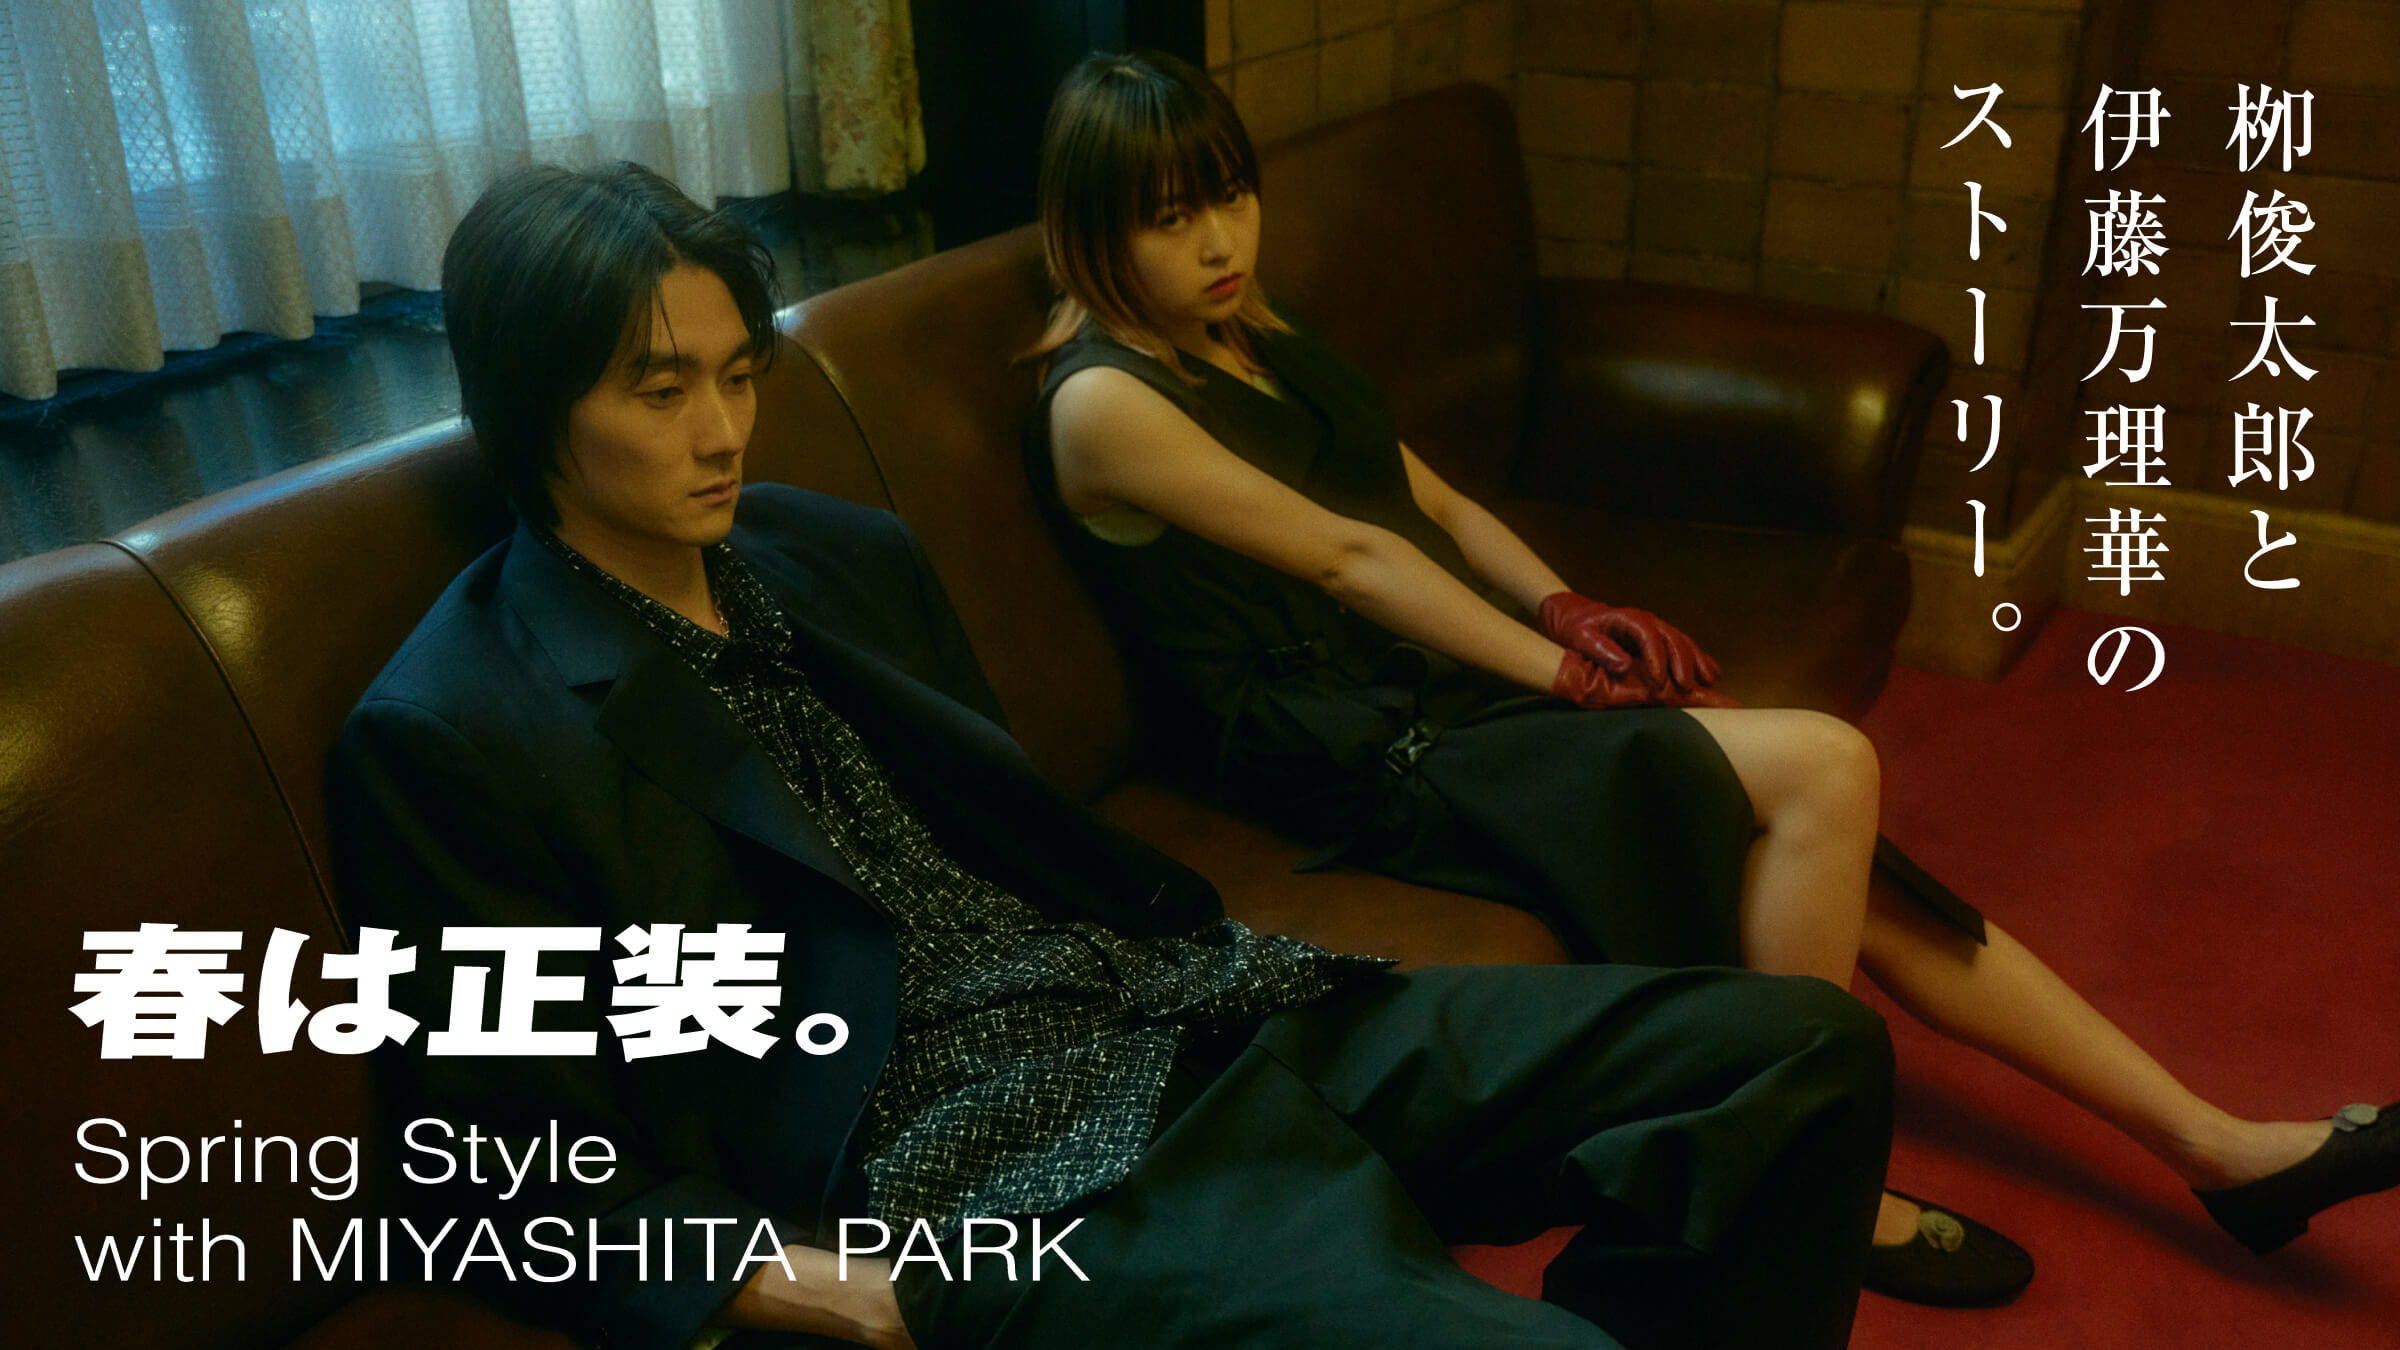 Spring Style with MIYASHITA PARK春は正装。栁俊太郎と伊藤万理華のストーリー。